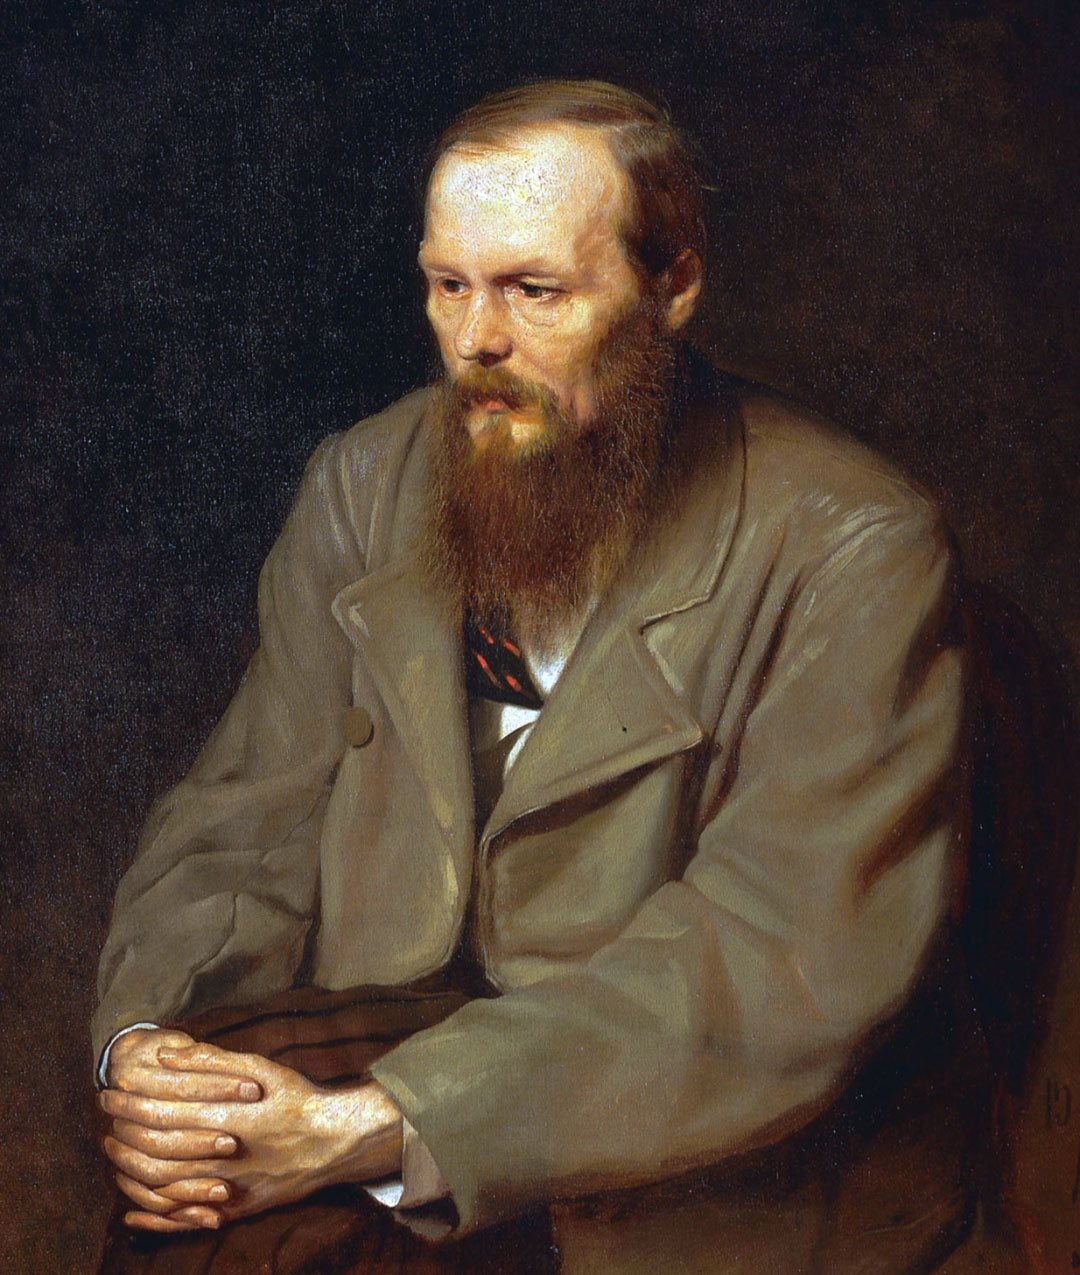  Fyodor Dostoevsky, জীবনী: ইতিহাস, জীবন এবং কাজ